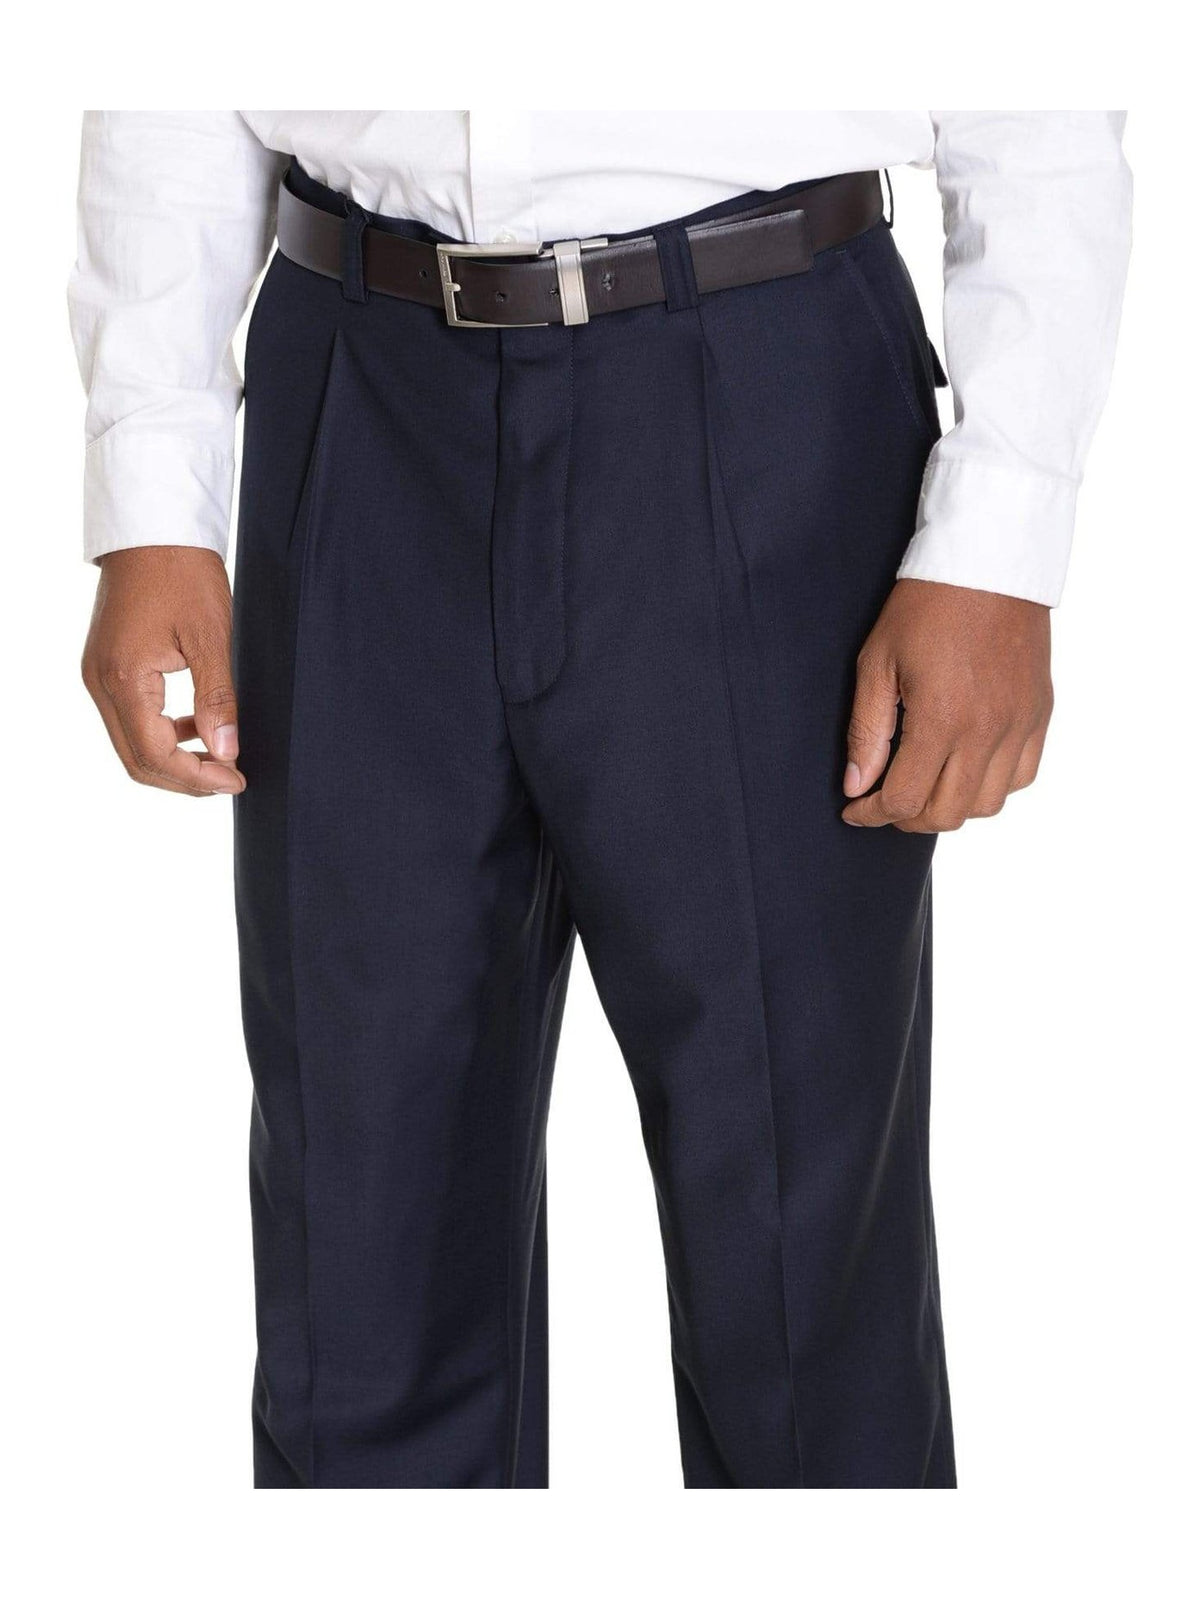 Raphael Classic Fit Solid Navy Blue Pleated Washable Dress Pants - The Suit Depot